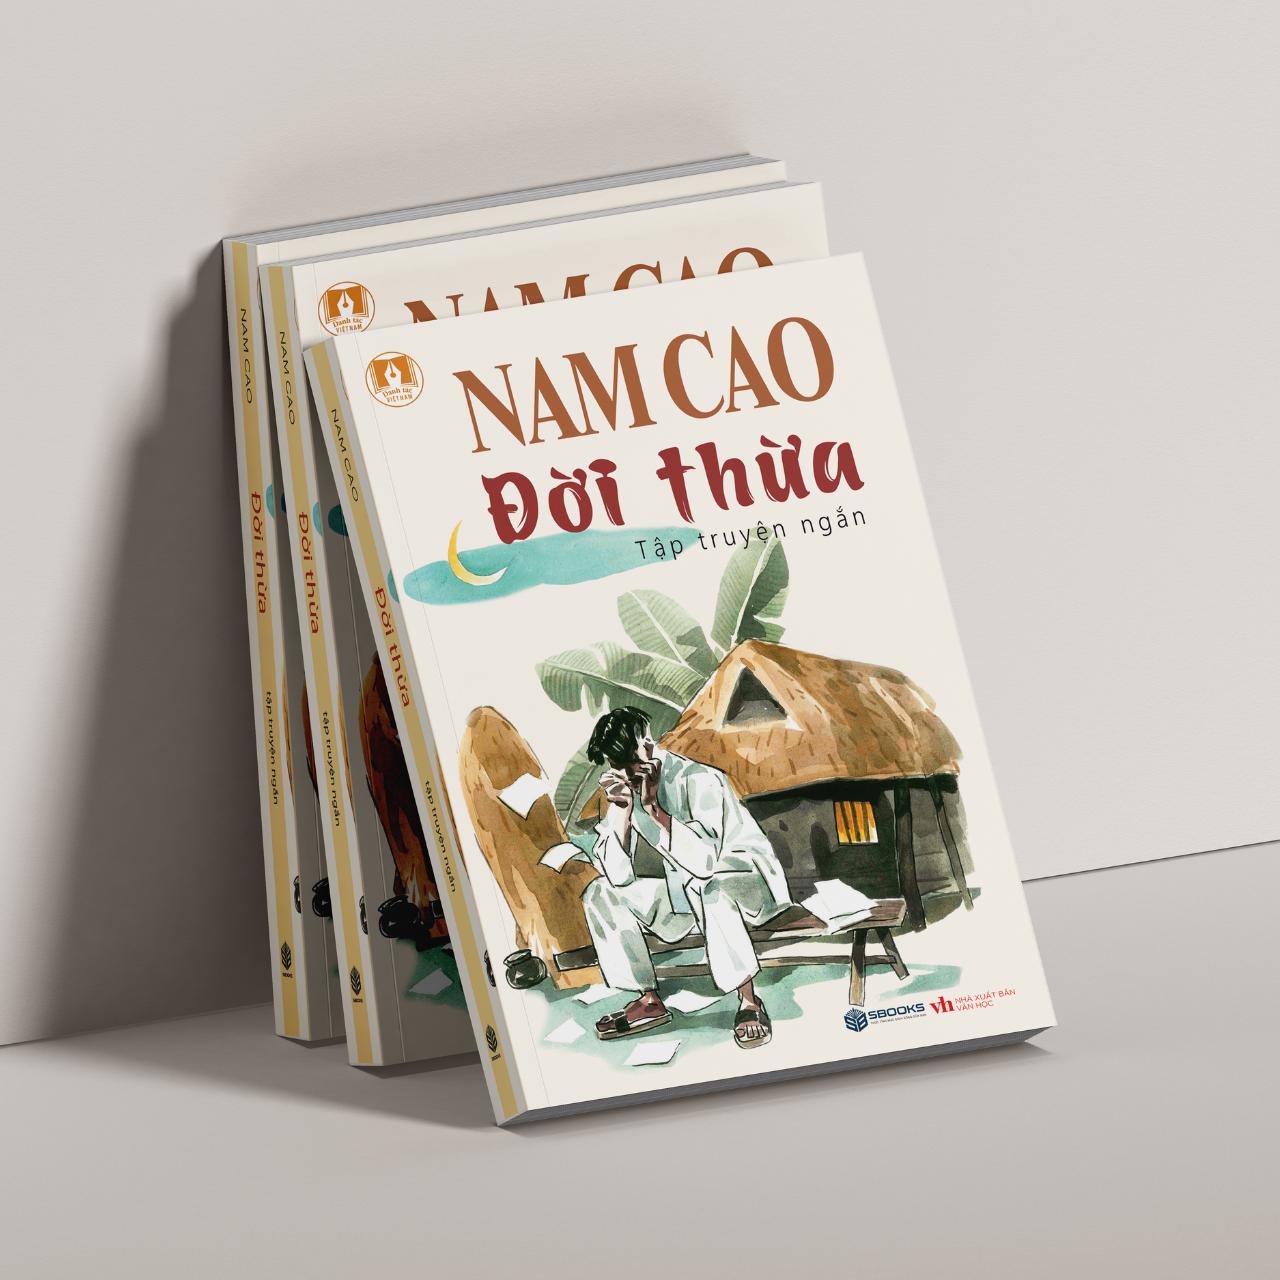 Sách - Đời Thừa (Nam Cao) - SBOOKS